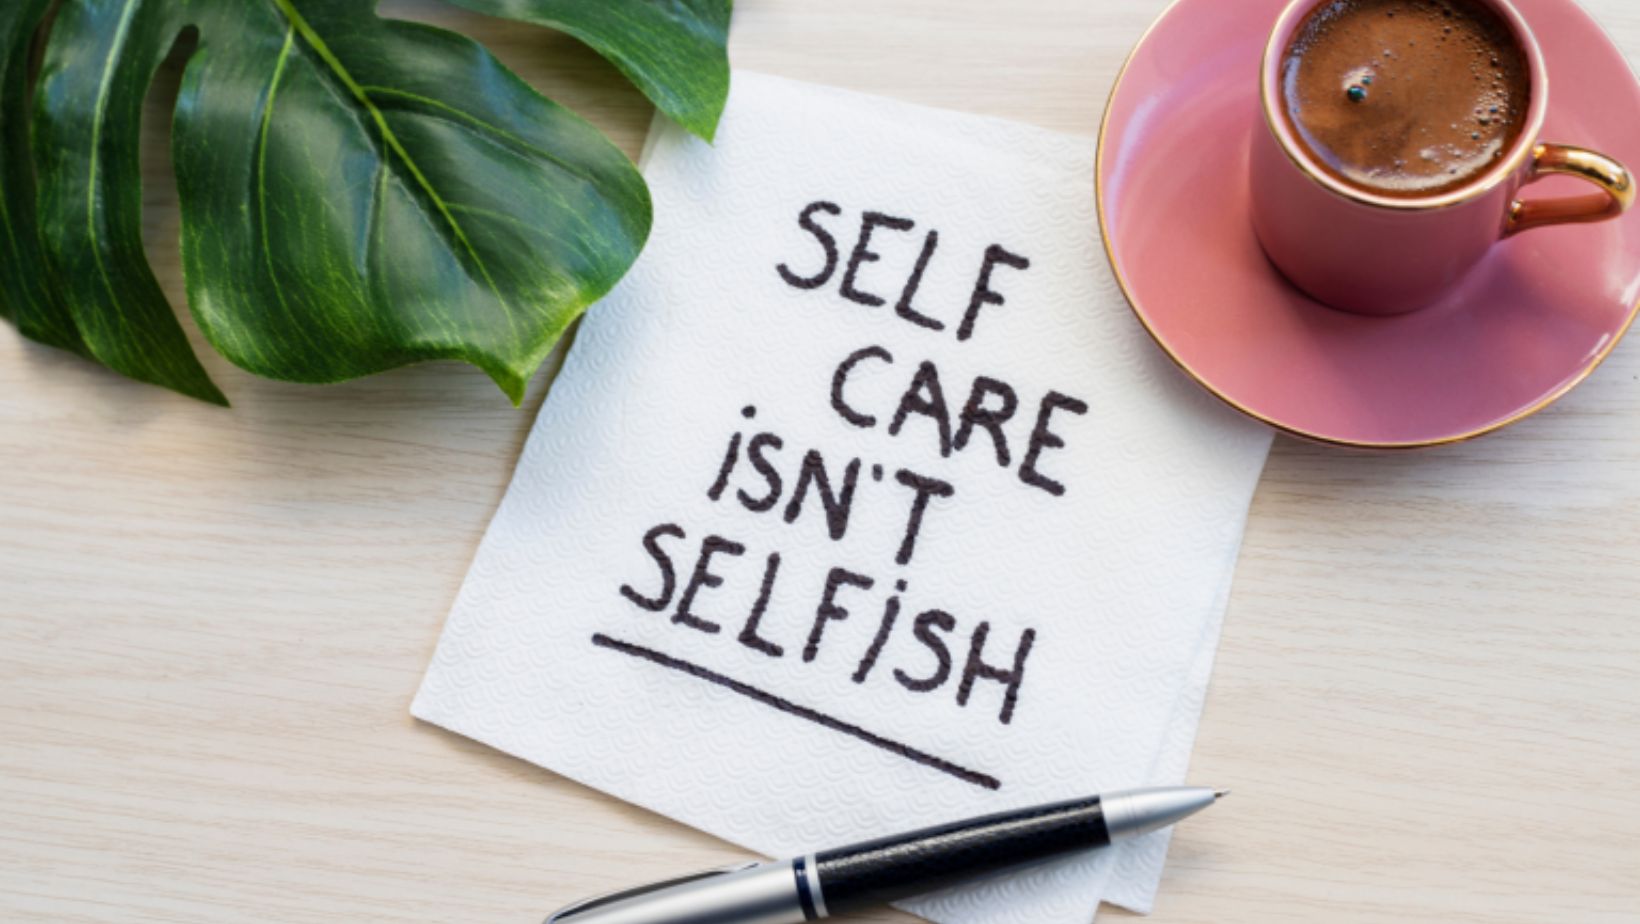 Why Selfcare Selfish